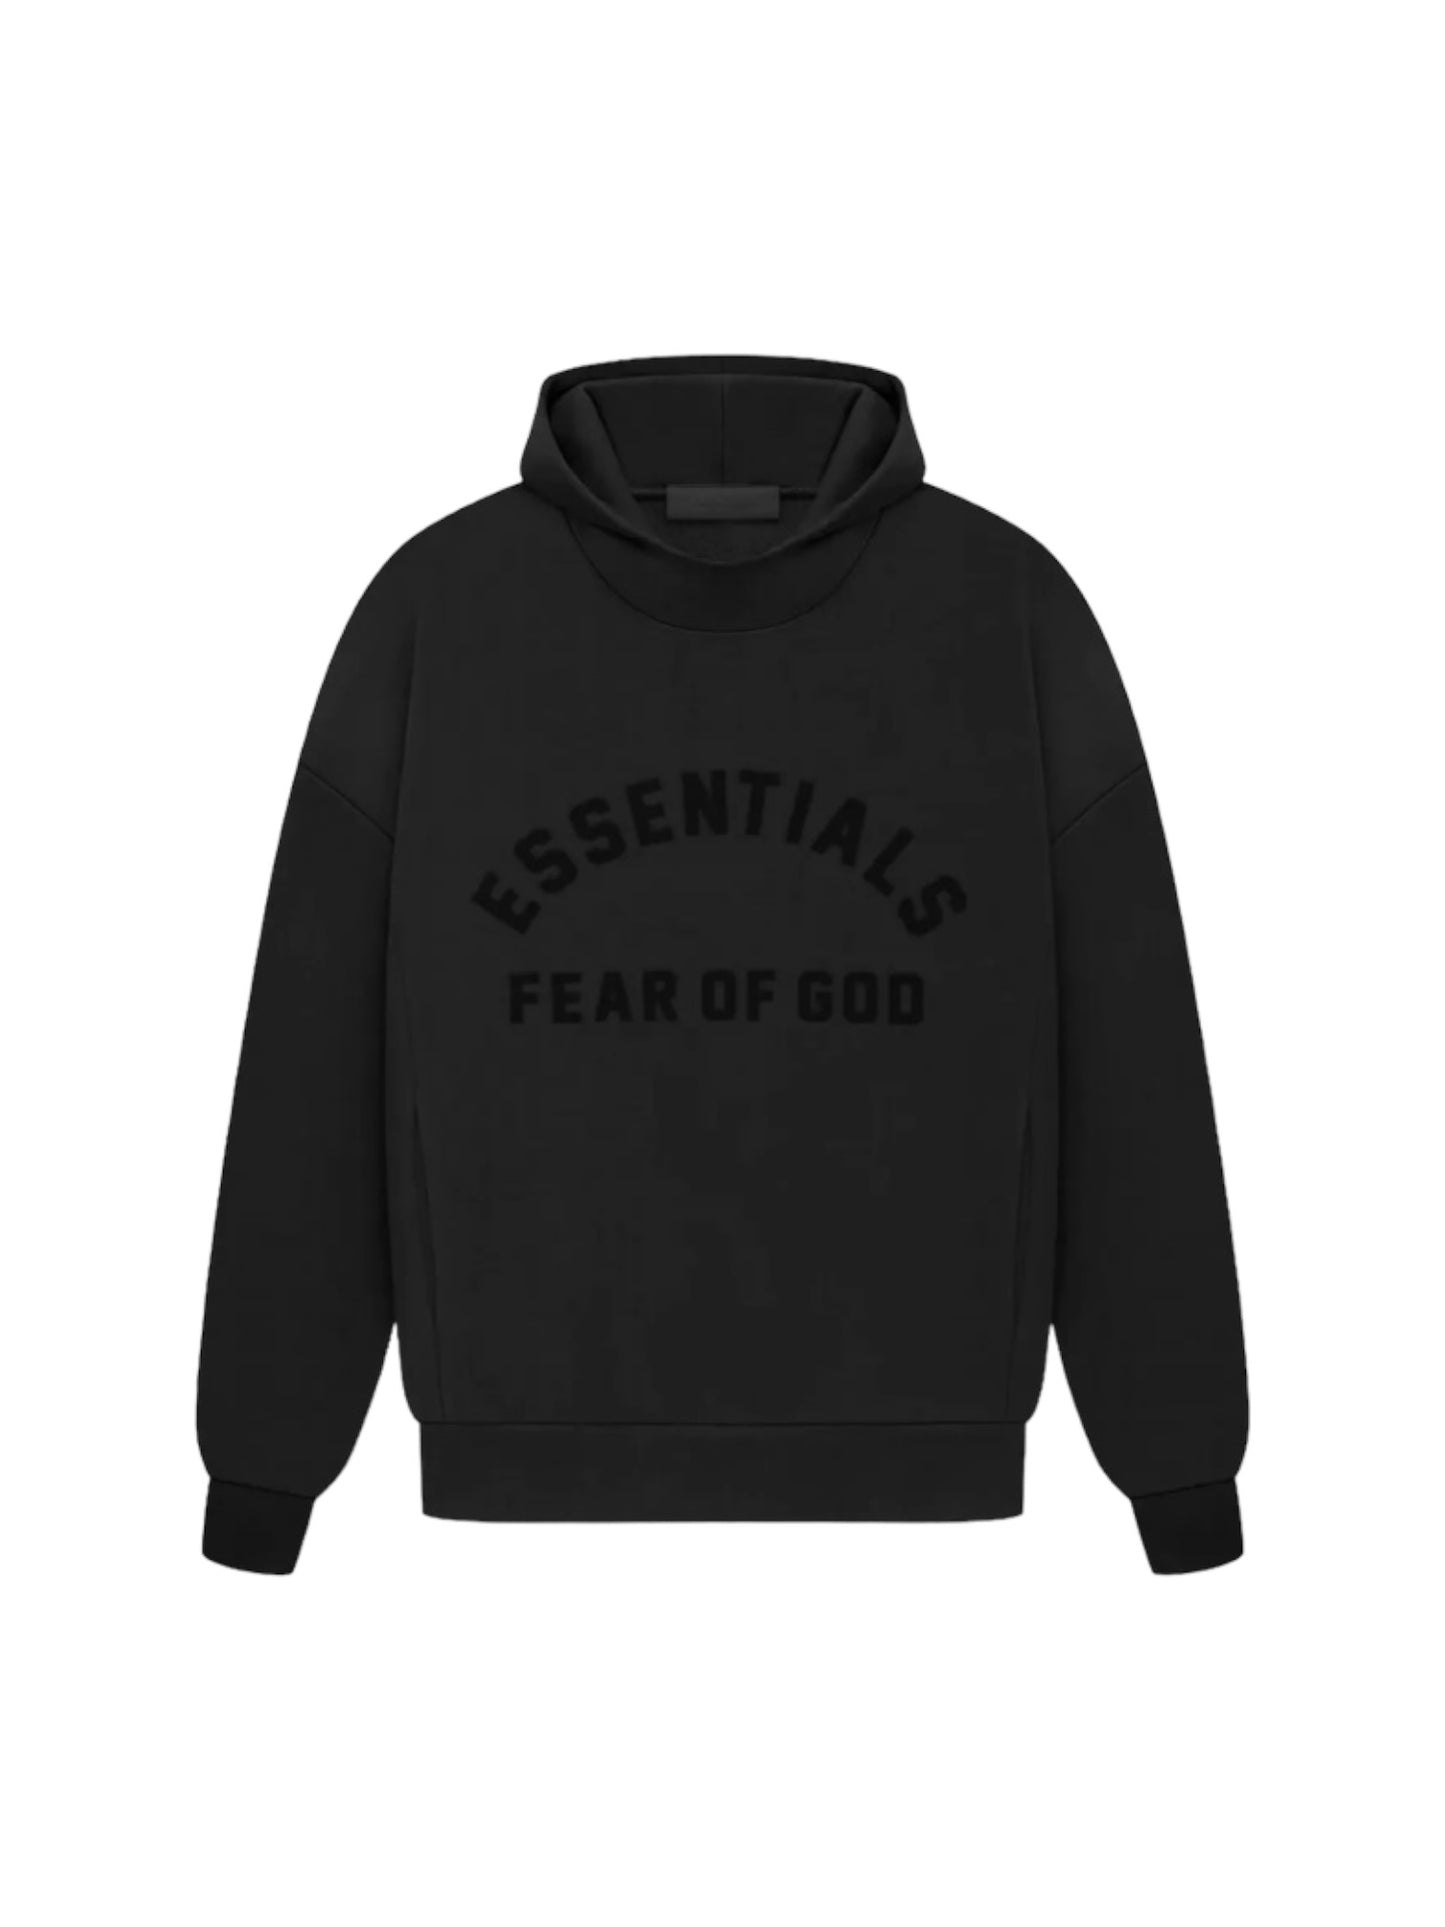 Essentials Fear of God Jet Black Hoodie SS23